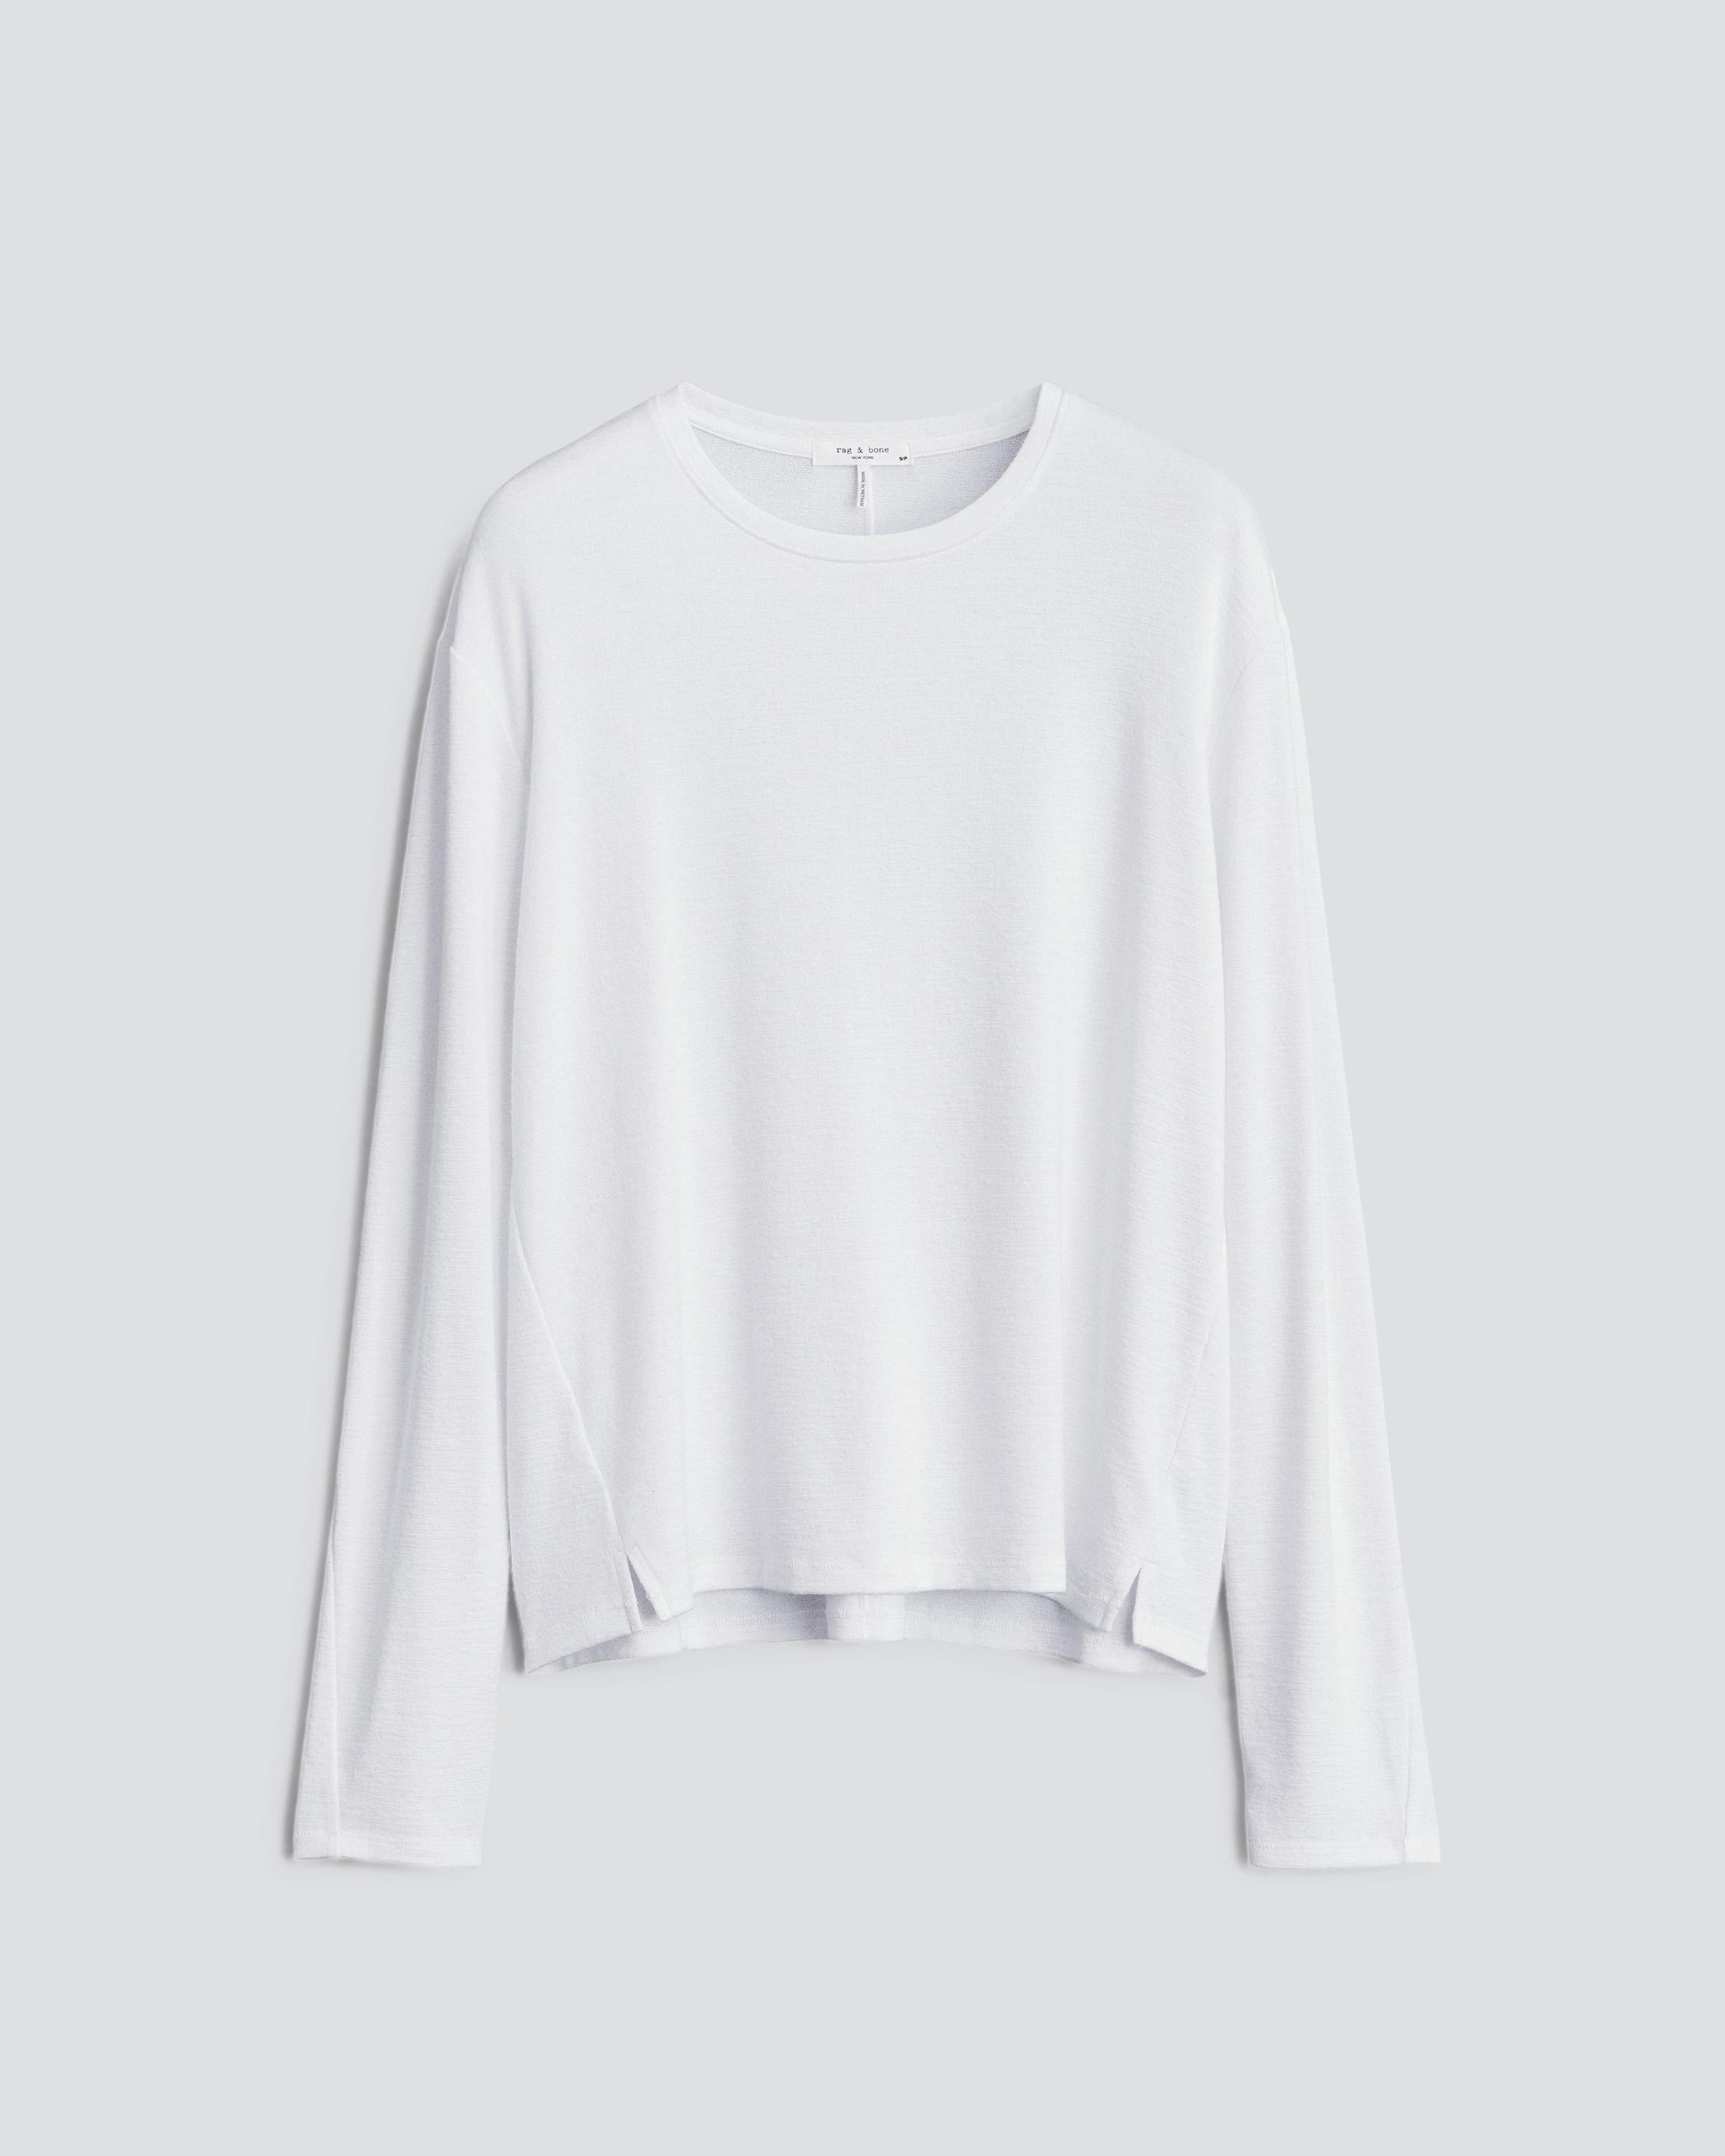 The Knit Long Sleeve Tee
Jersey T-Shirt - 1